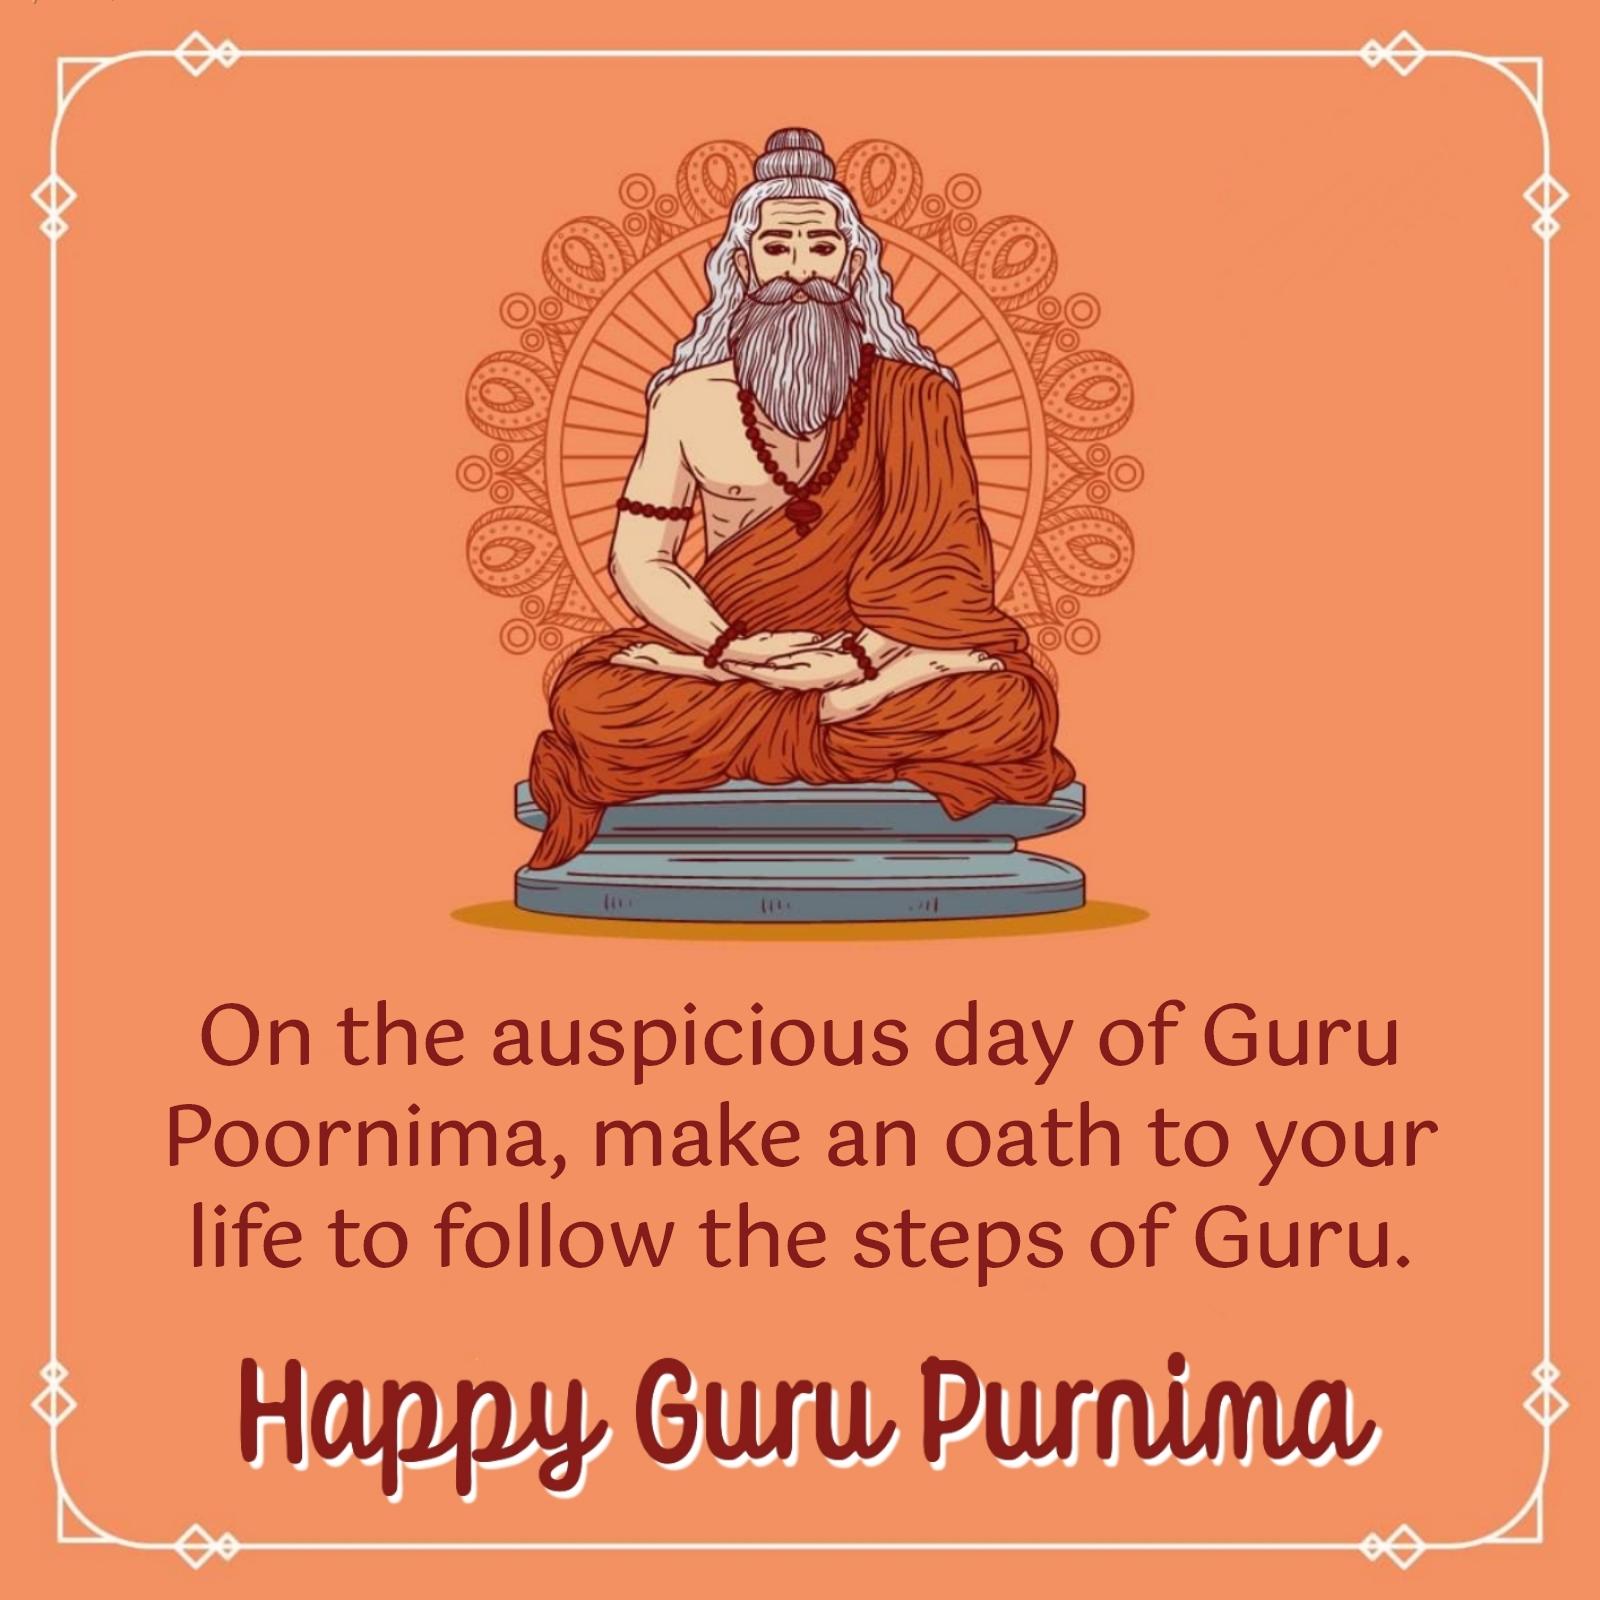 On the auspicious day of Guru Poornima make an oath